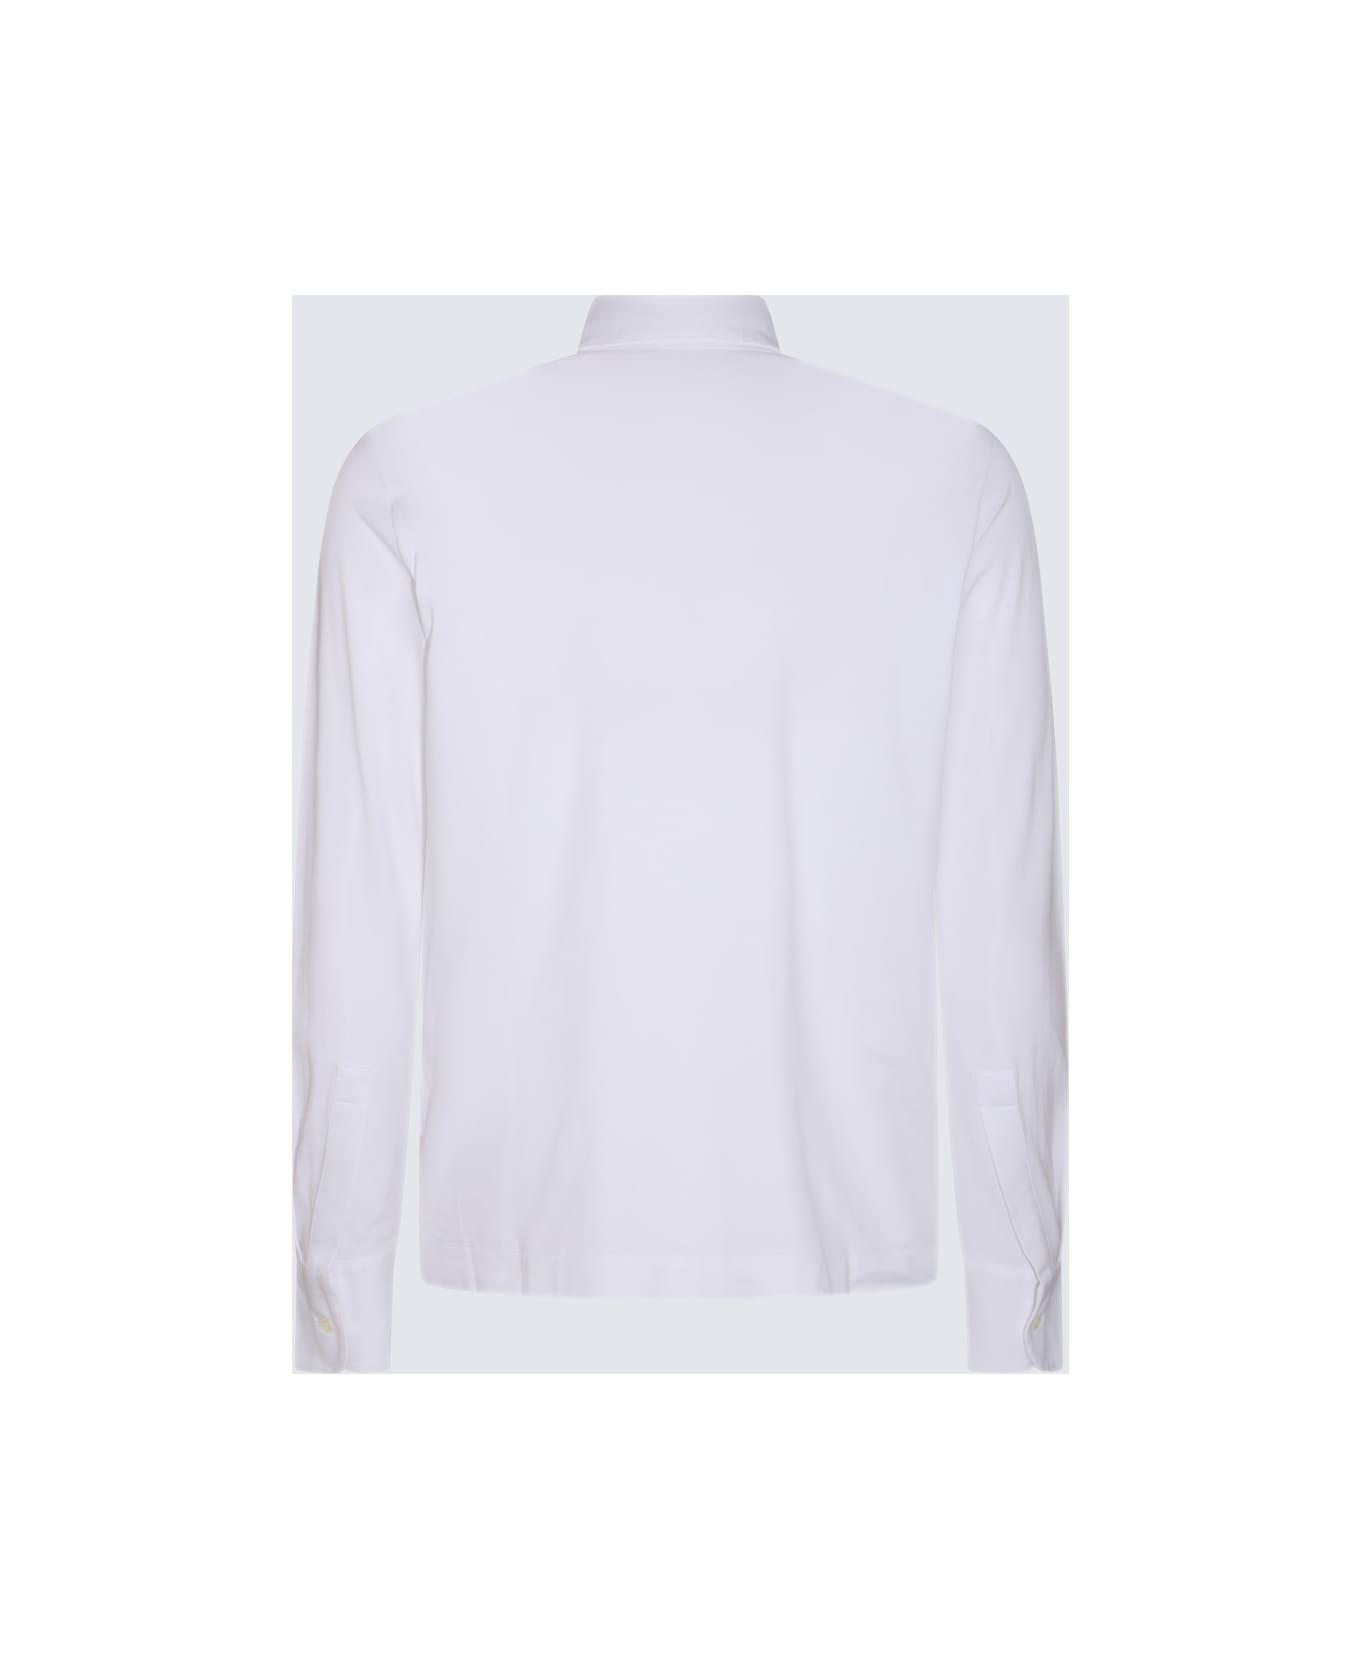 Cruciani White Cotton Shirt - White シャツ